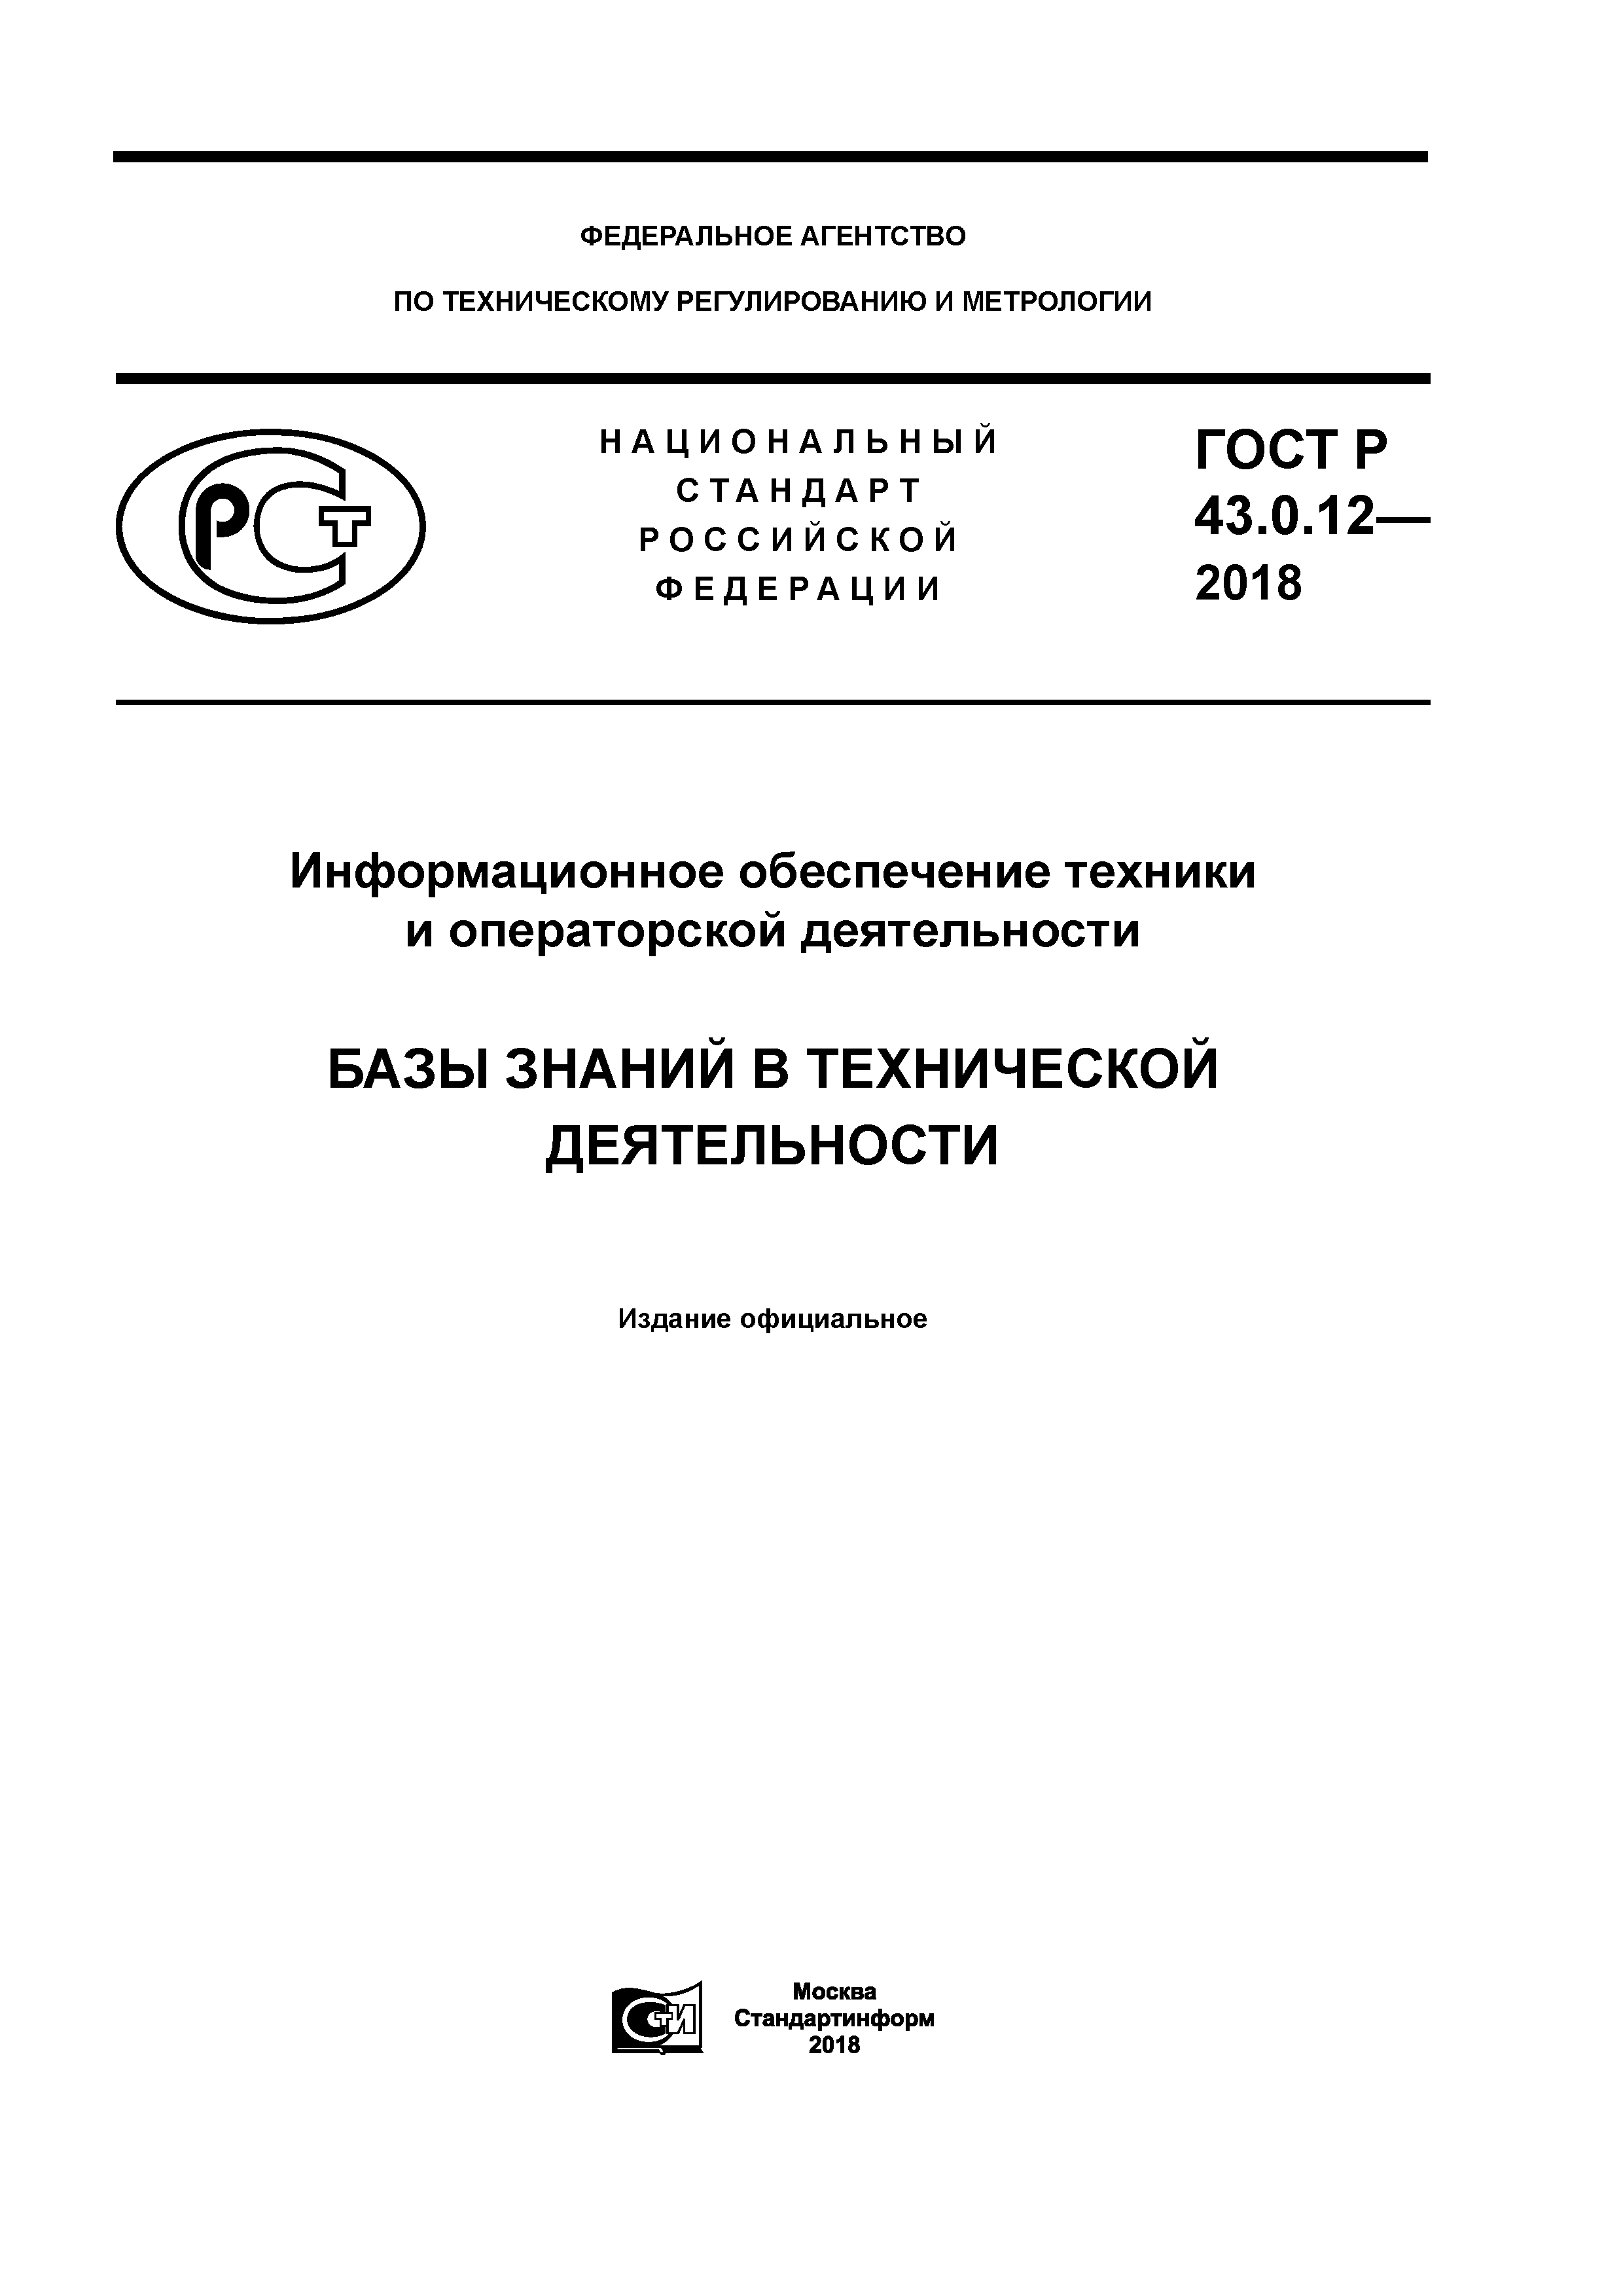 ГОСТ Р 43.0.12-2018